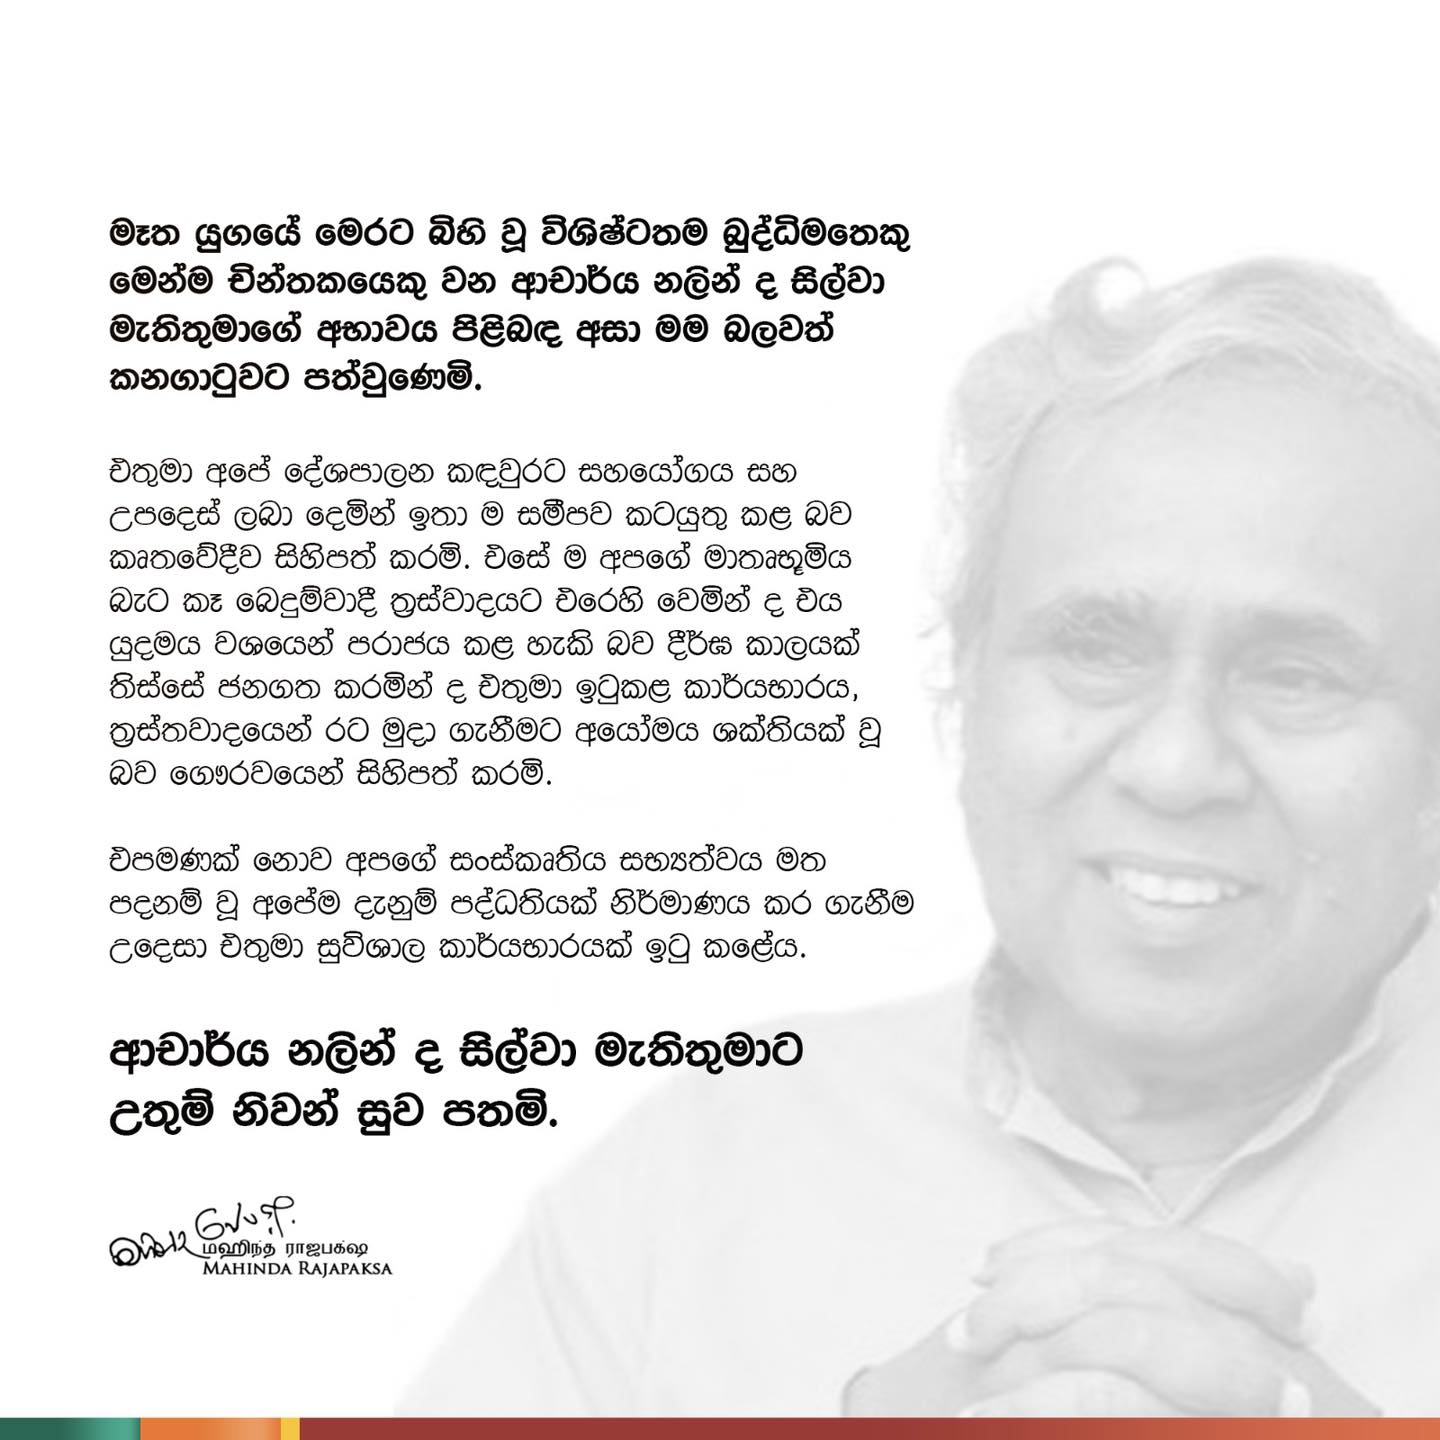 Mahinda Rajapakse's condolence message on the passing away of Nalin de Silva